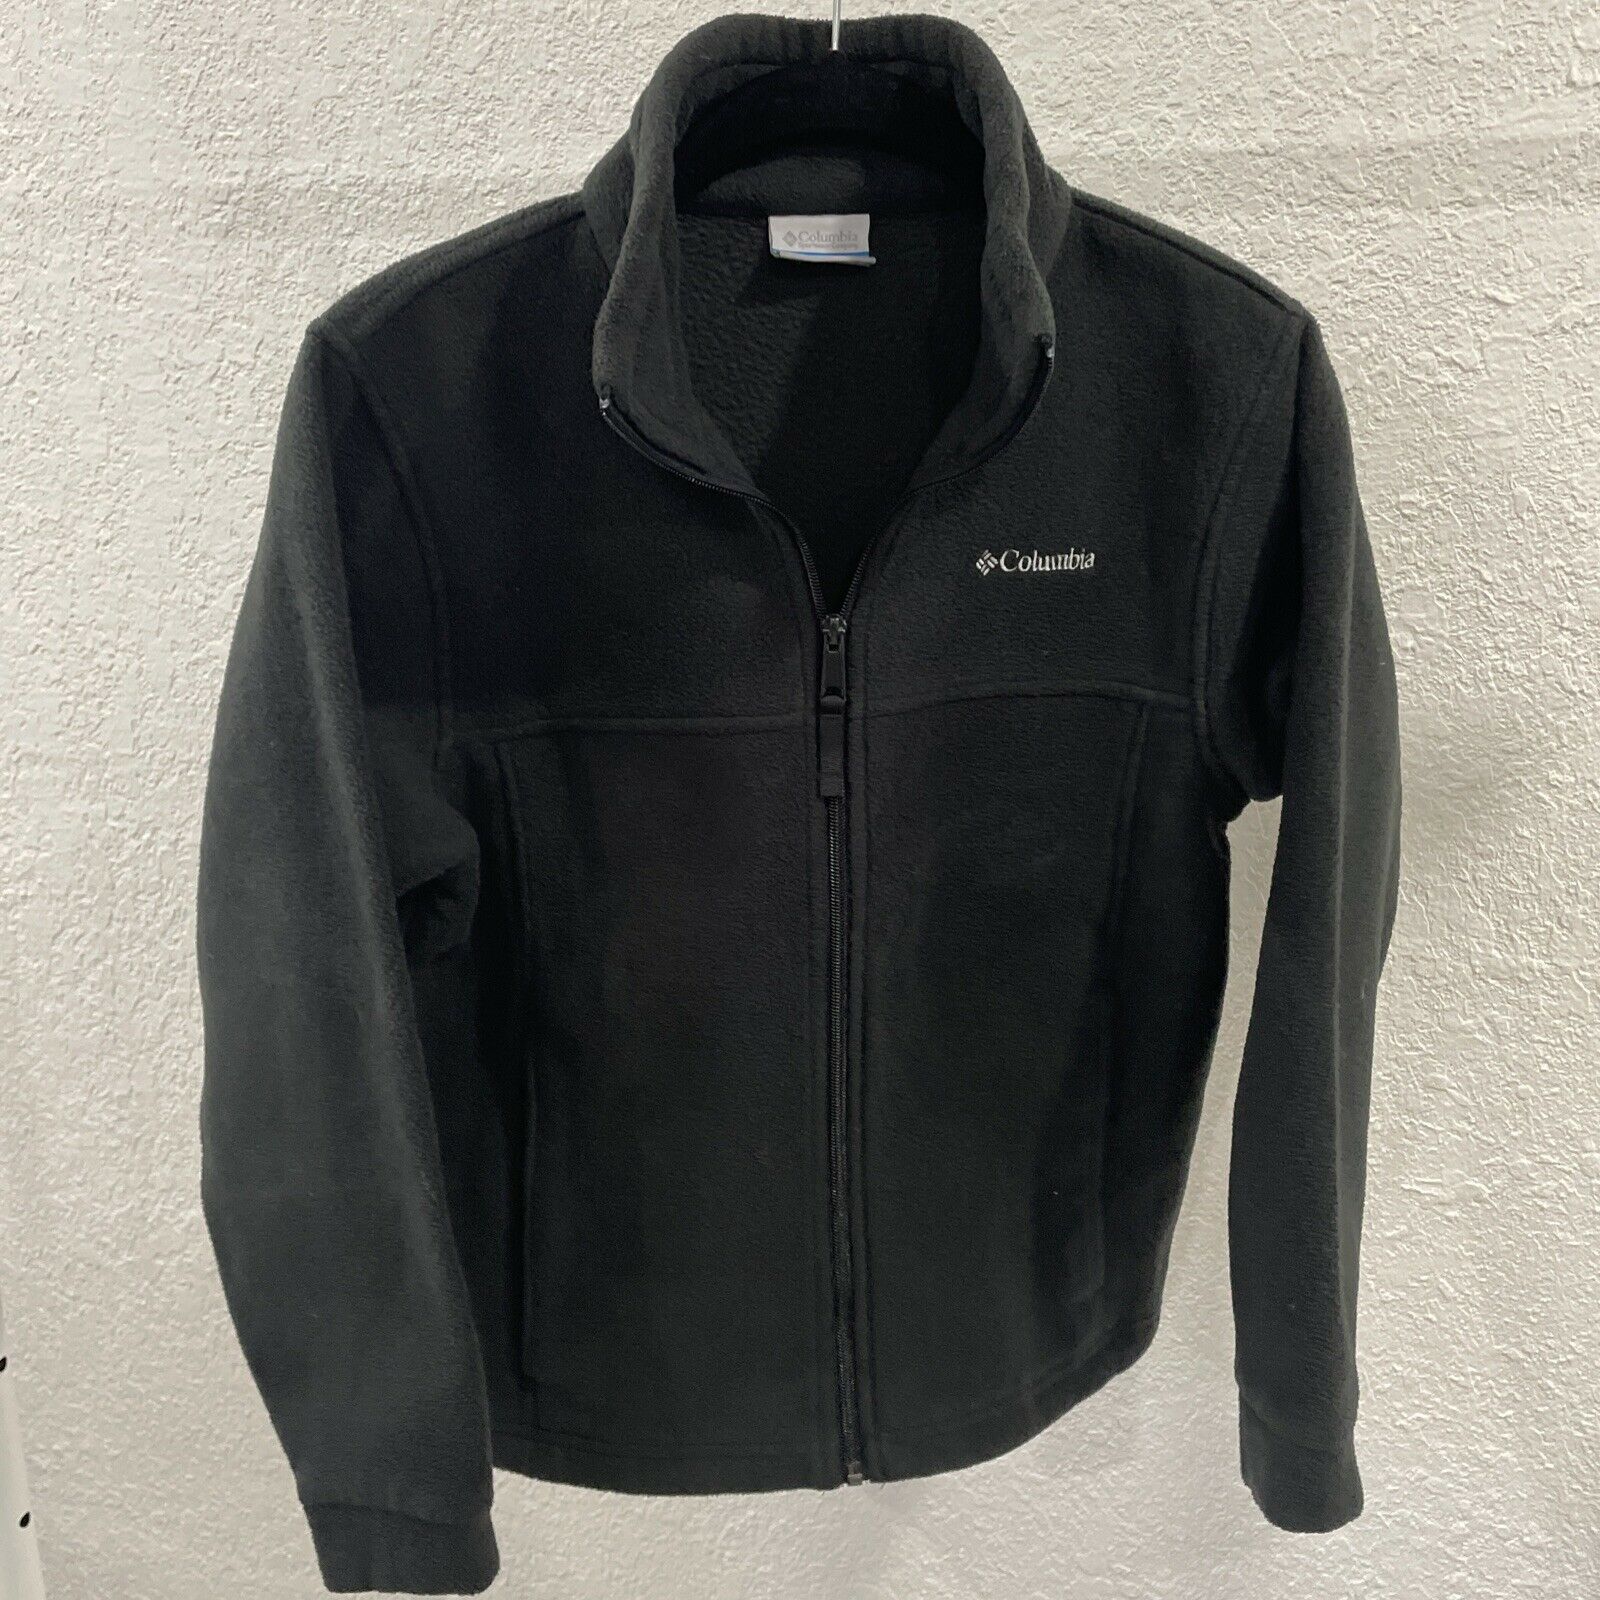 Columbia Youth Full Zip Fleece Jacket Size Medium 10/12 Black